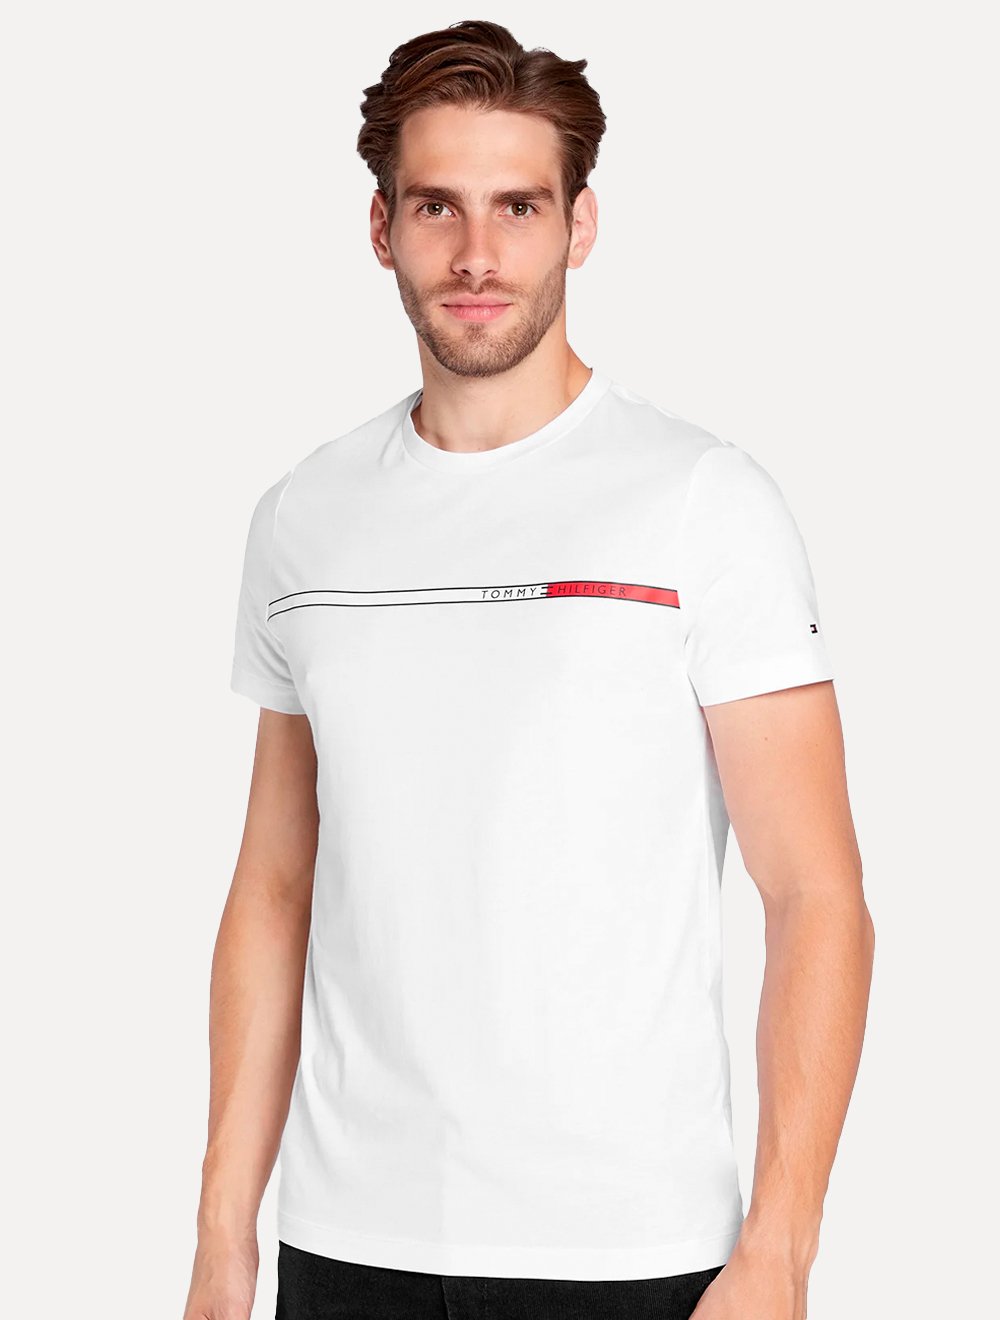 Tommy Hilfiger T-shirt original branca - Esdemarca Loja moda